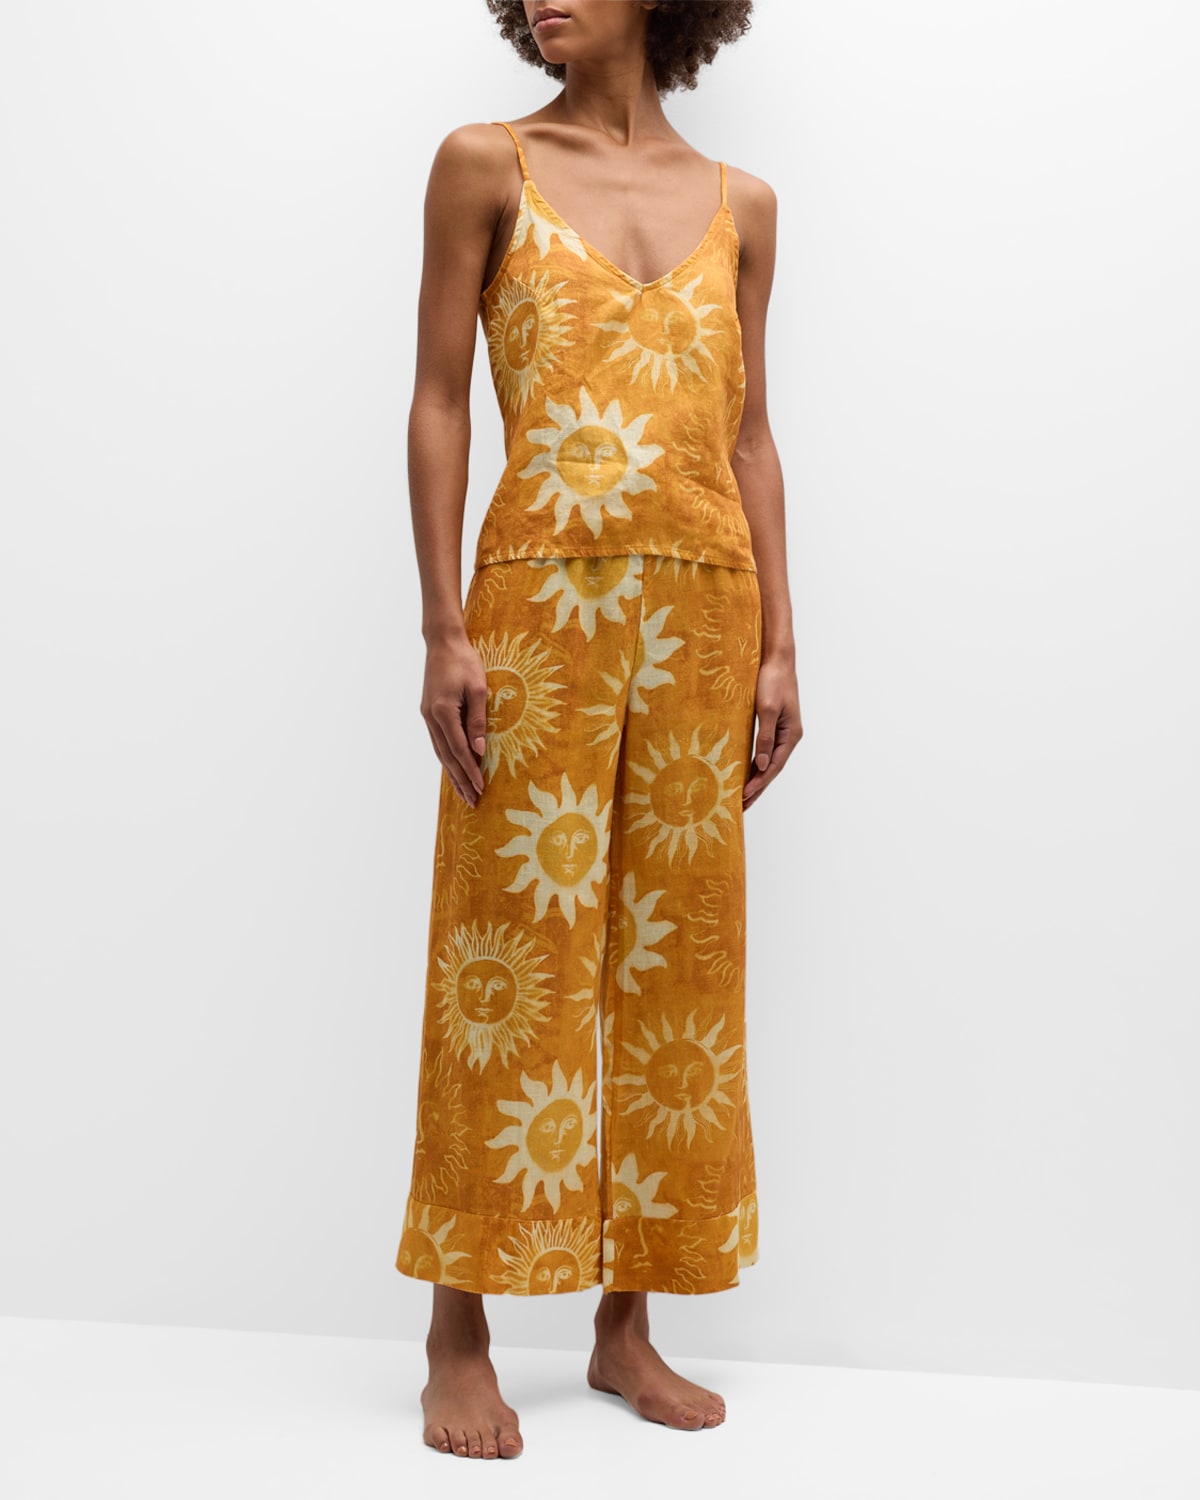 Desmond & Dempsey Cropped Sun-Print Linen Pajama Set